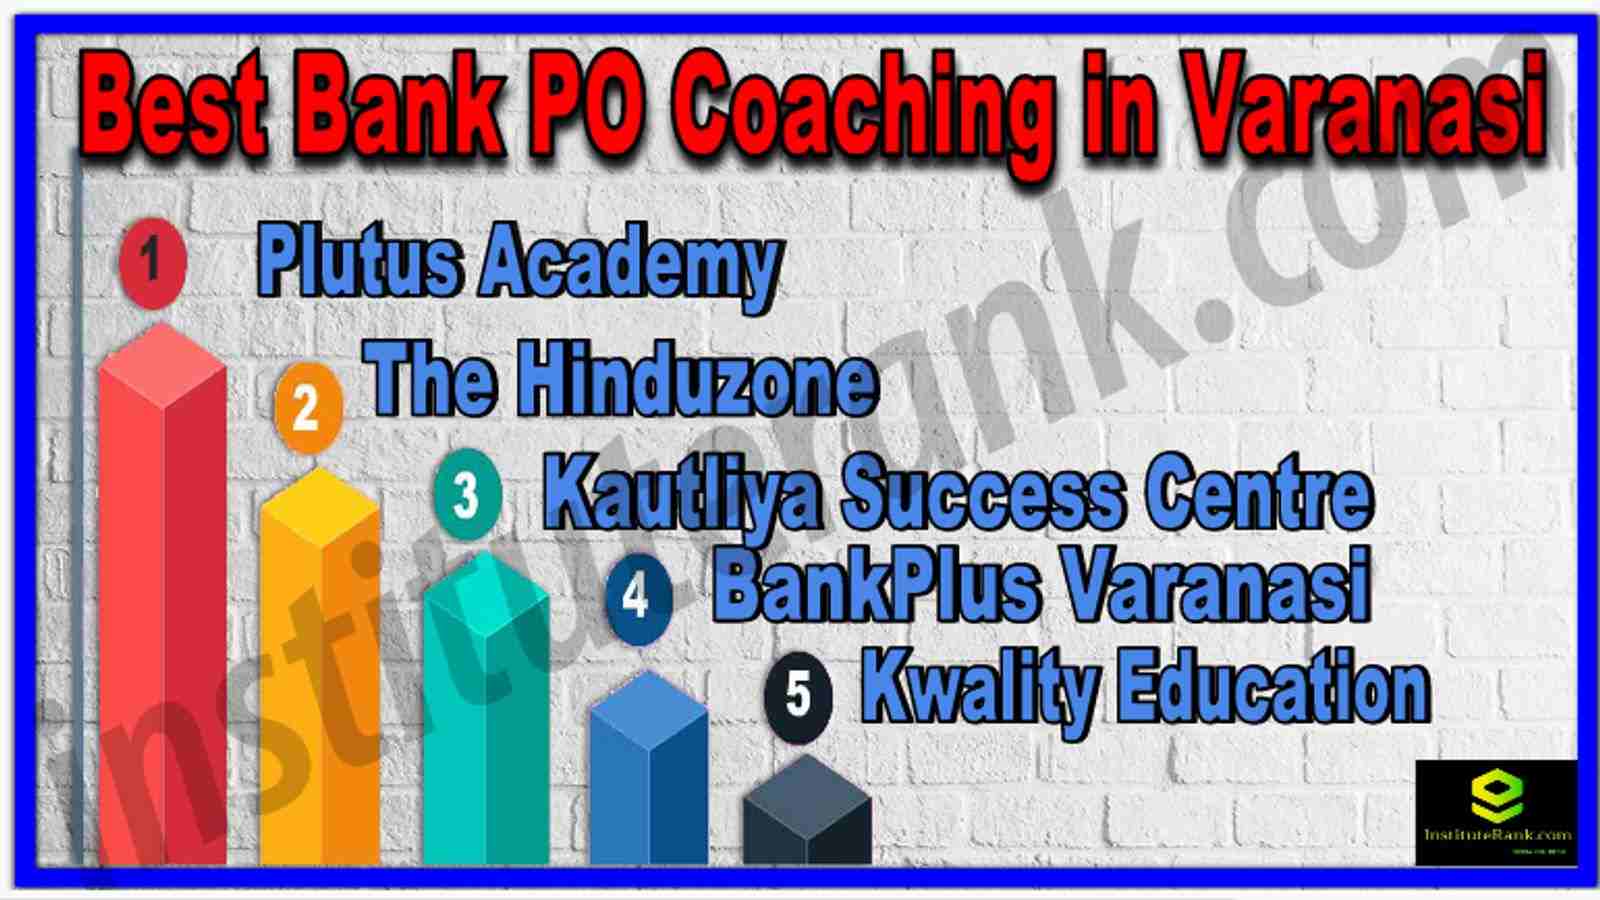 Best Bank PO Coaching in Varanasi